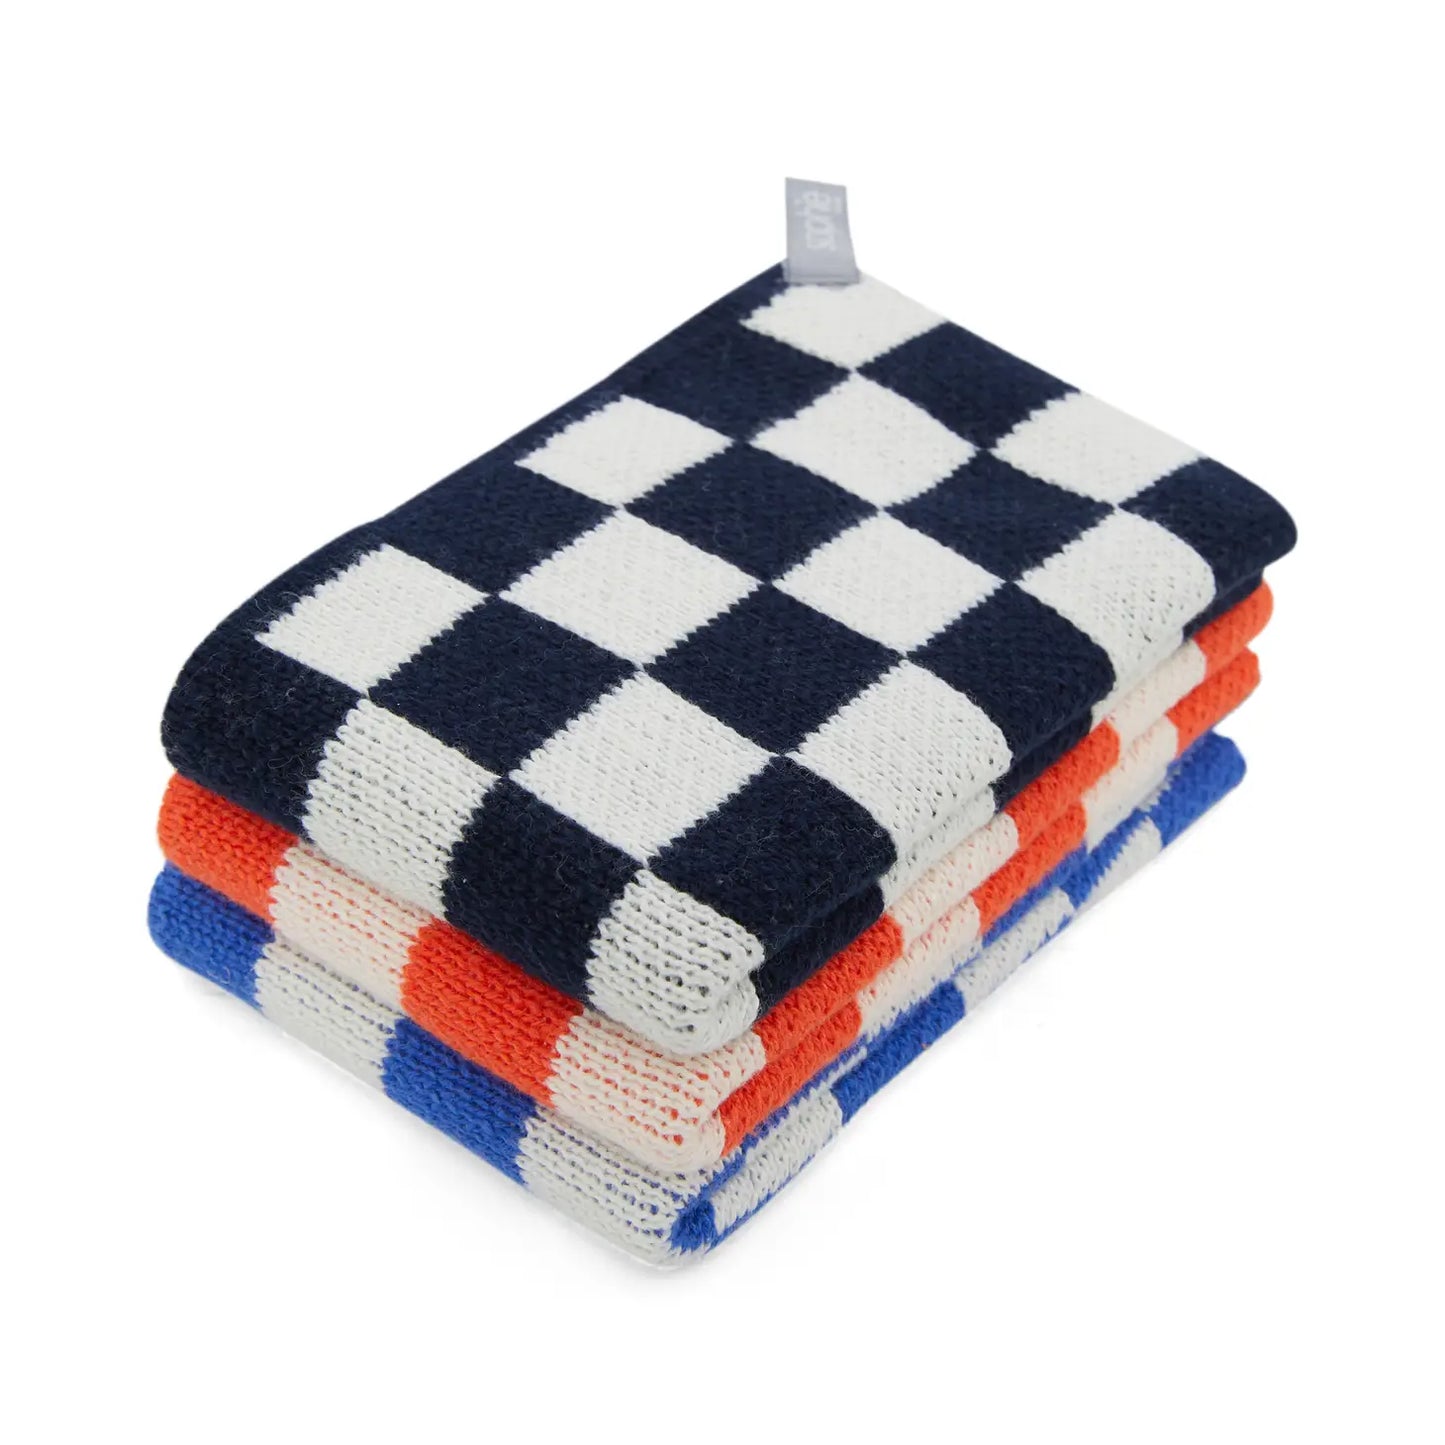 Reusable & Eco-Friendly Cotton Knit Dishcloths - Navy Check